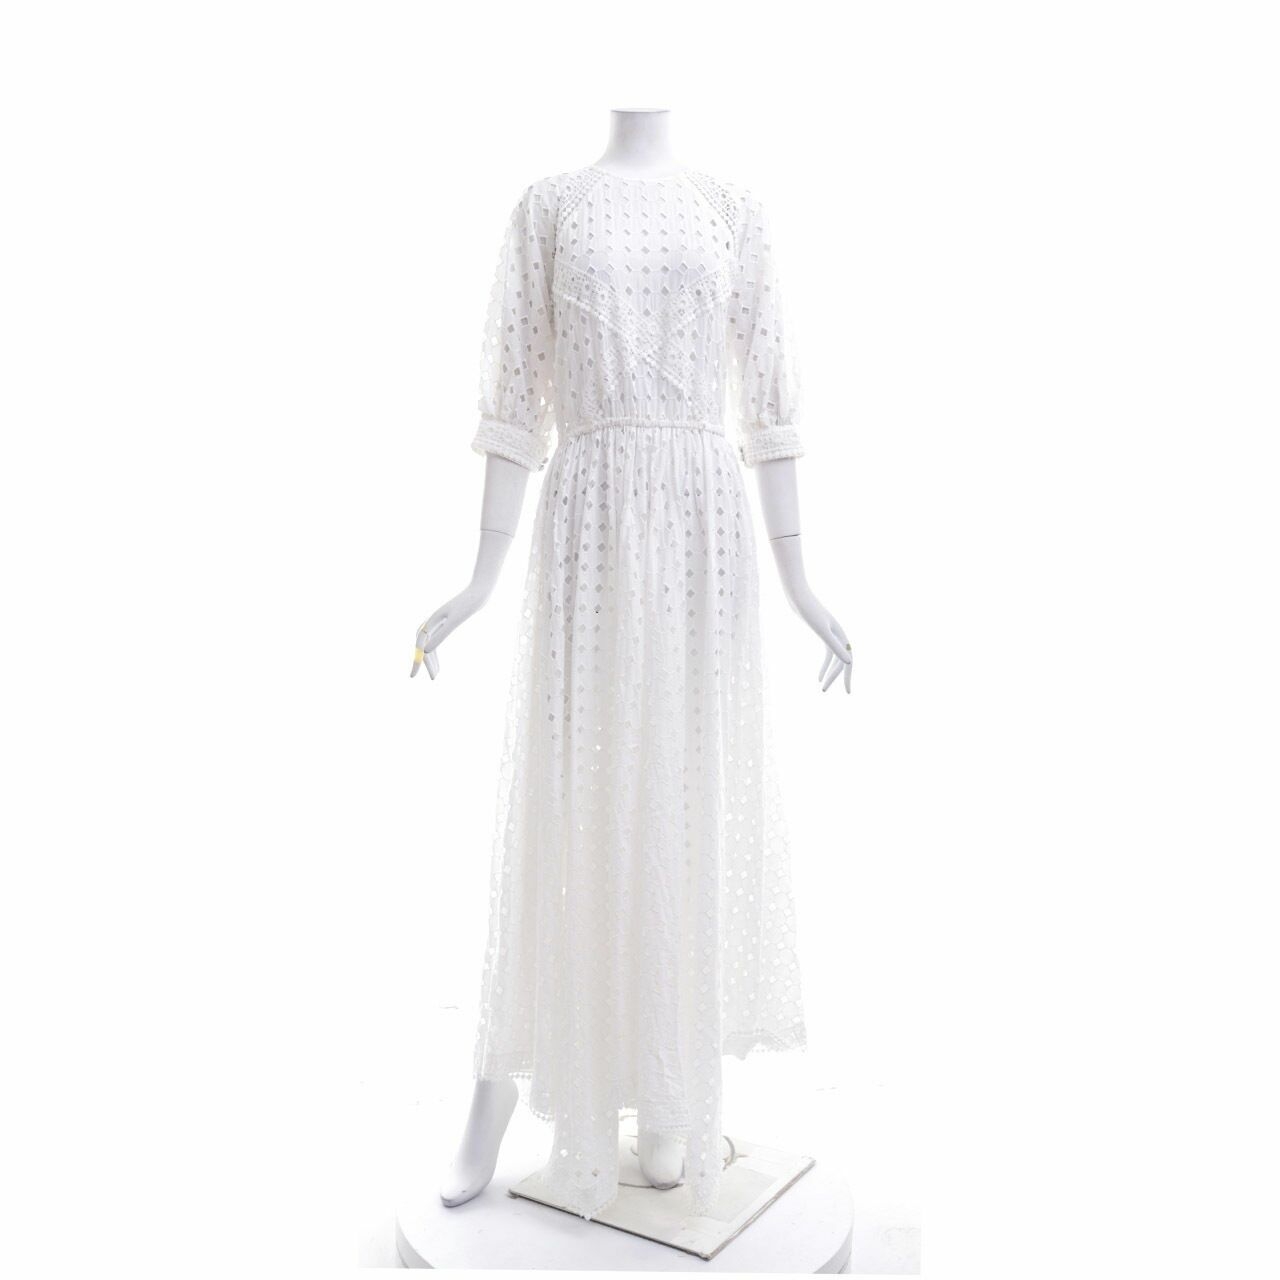 Barli Asmara White Perforated Long Dress